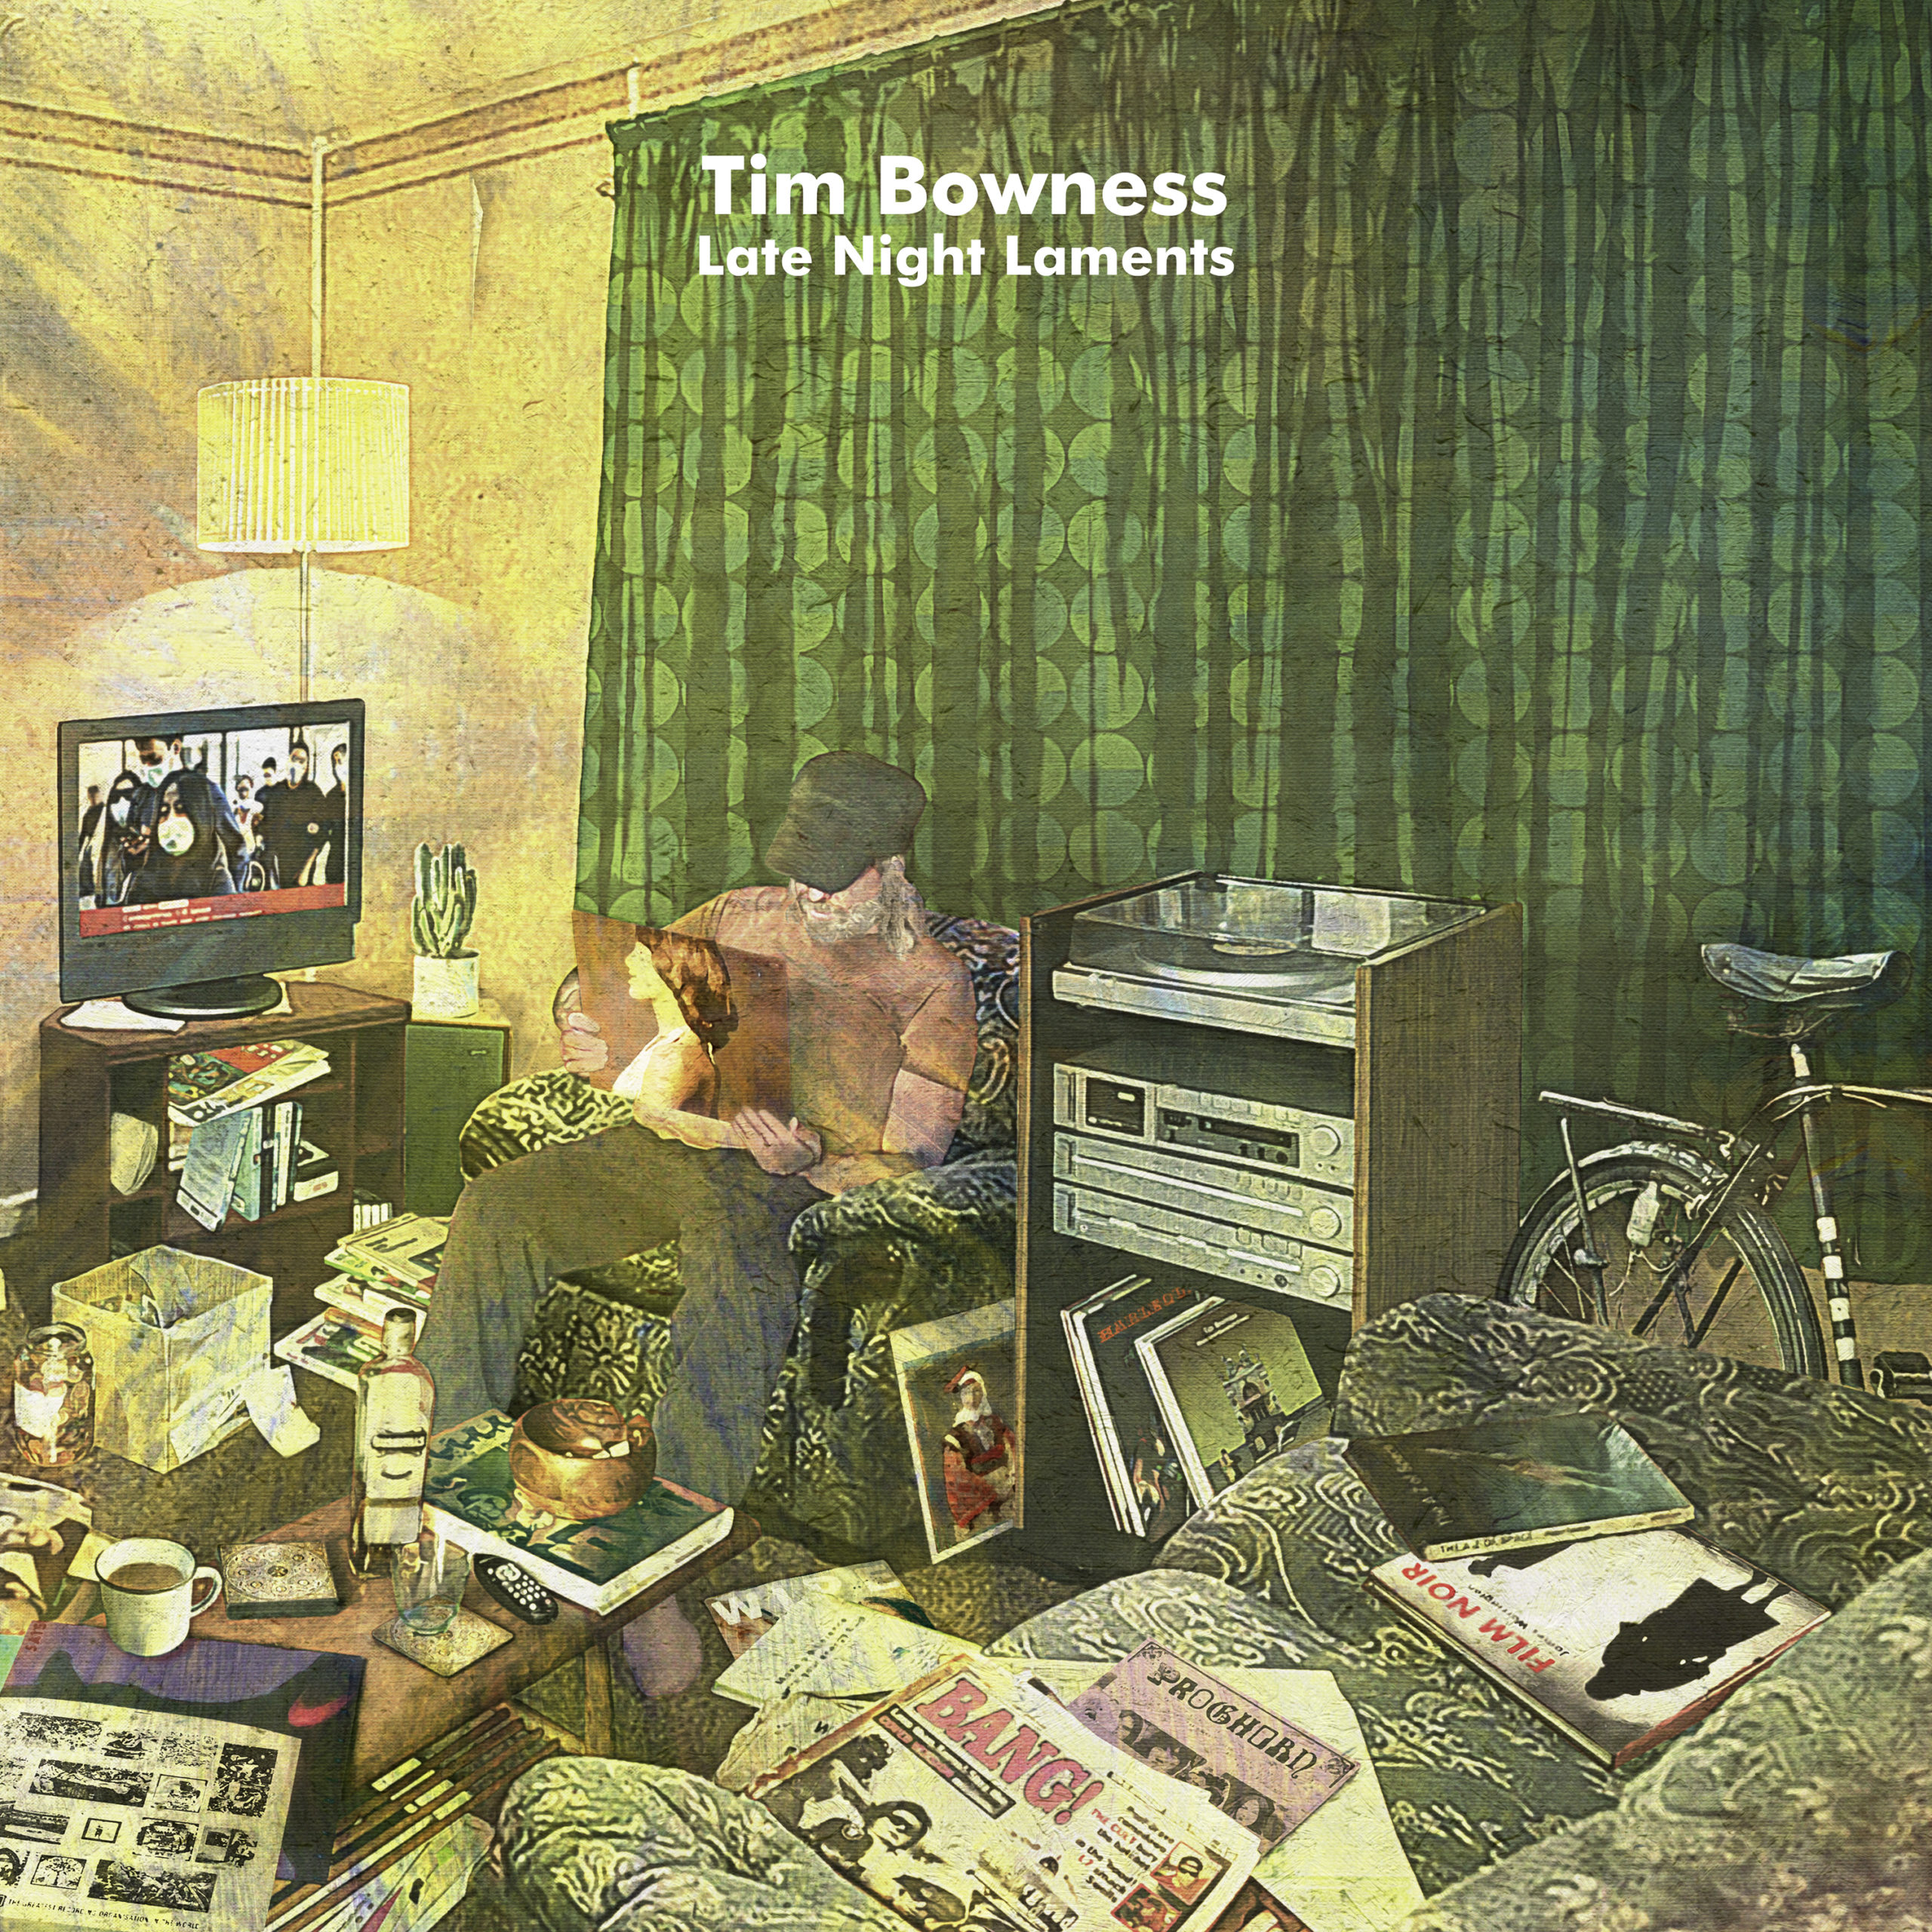 [Reseña] “Late Night Laments” nuevo disco de TIM BOWNESS